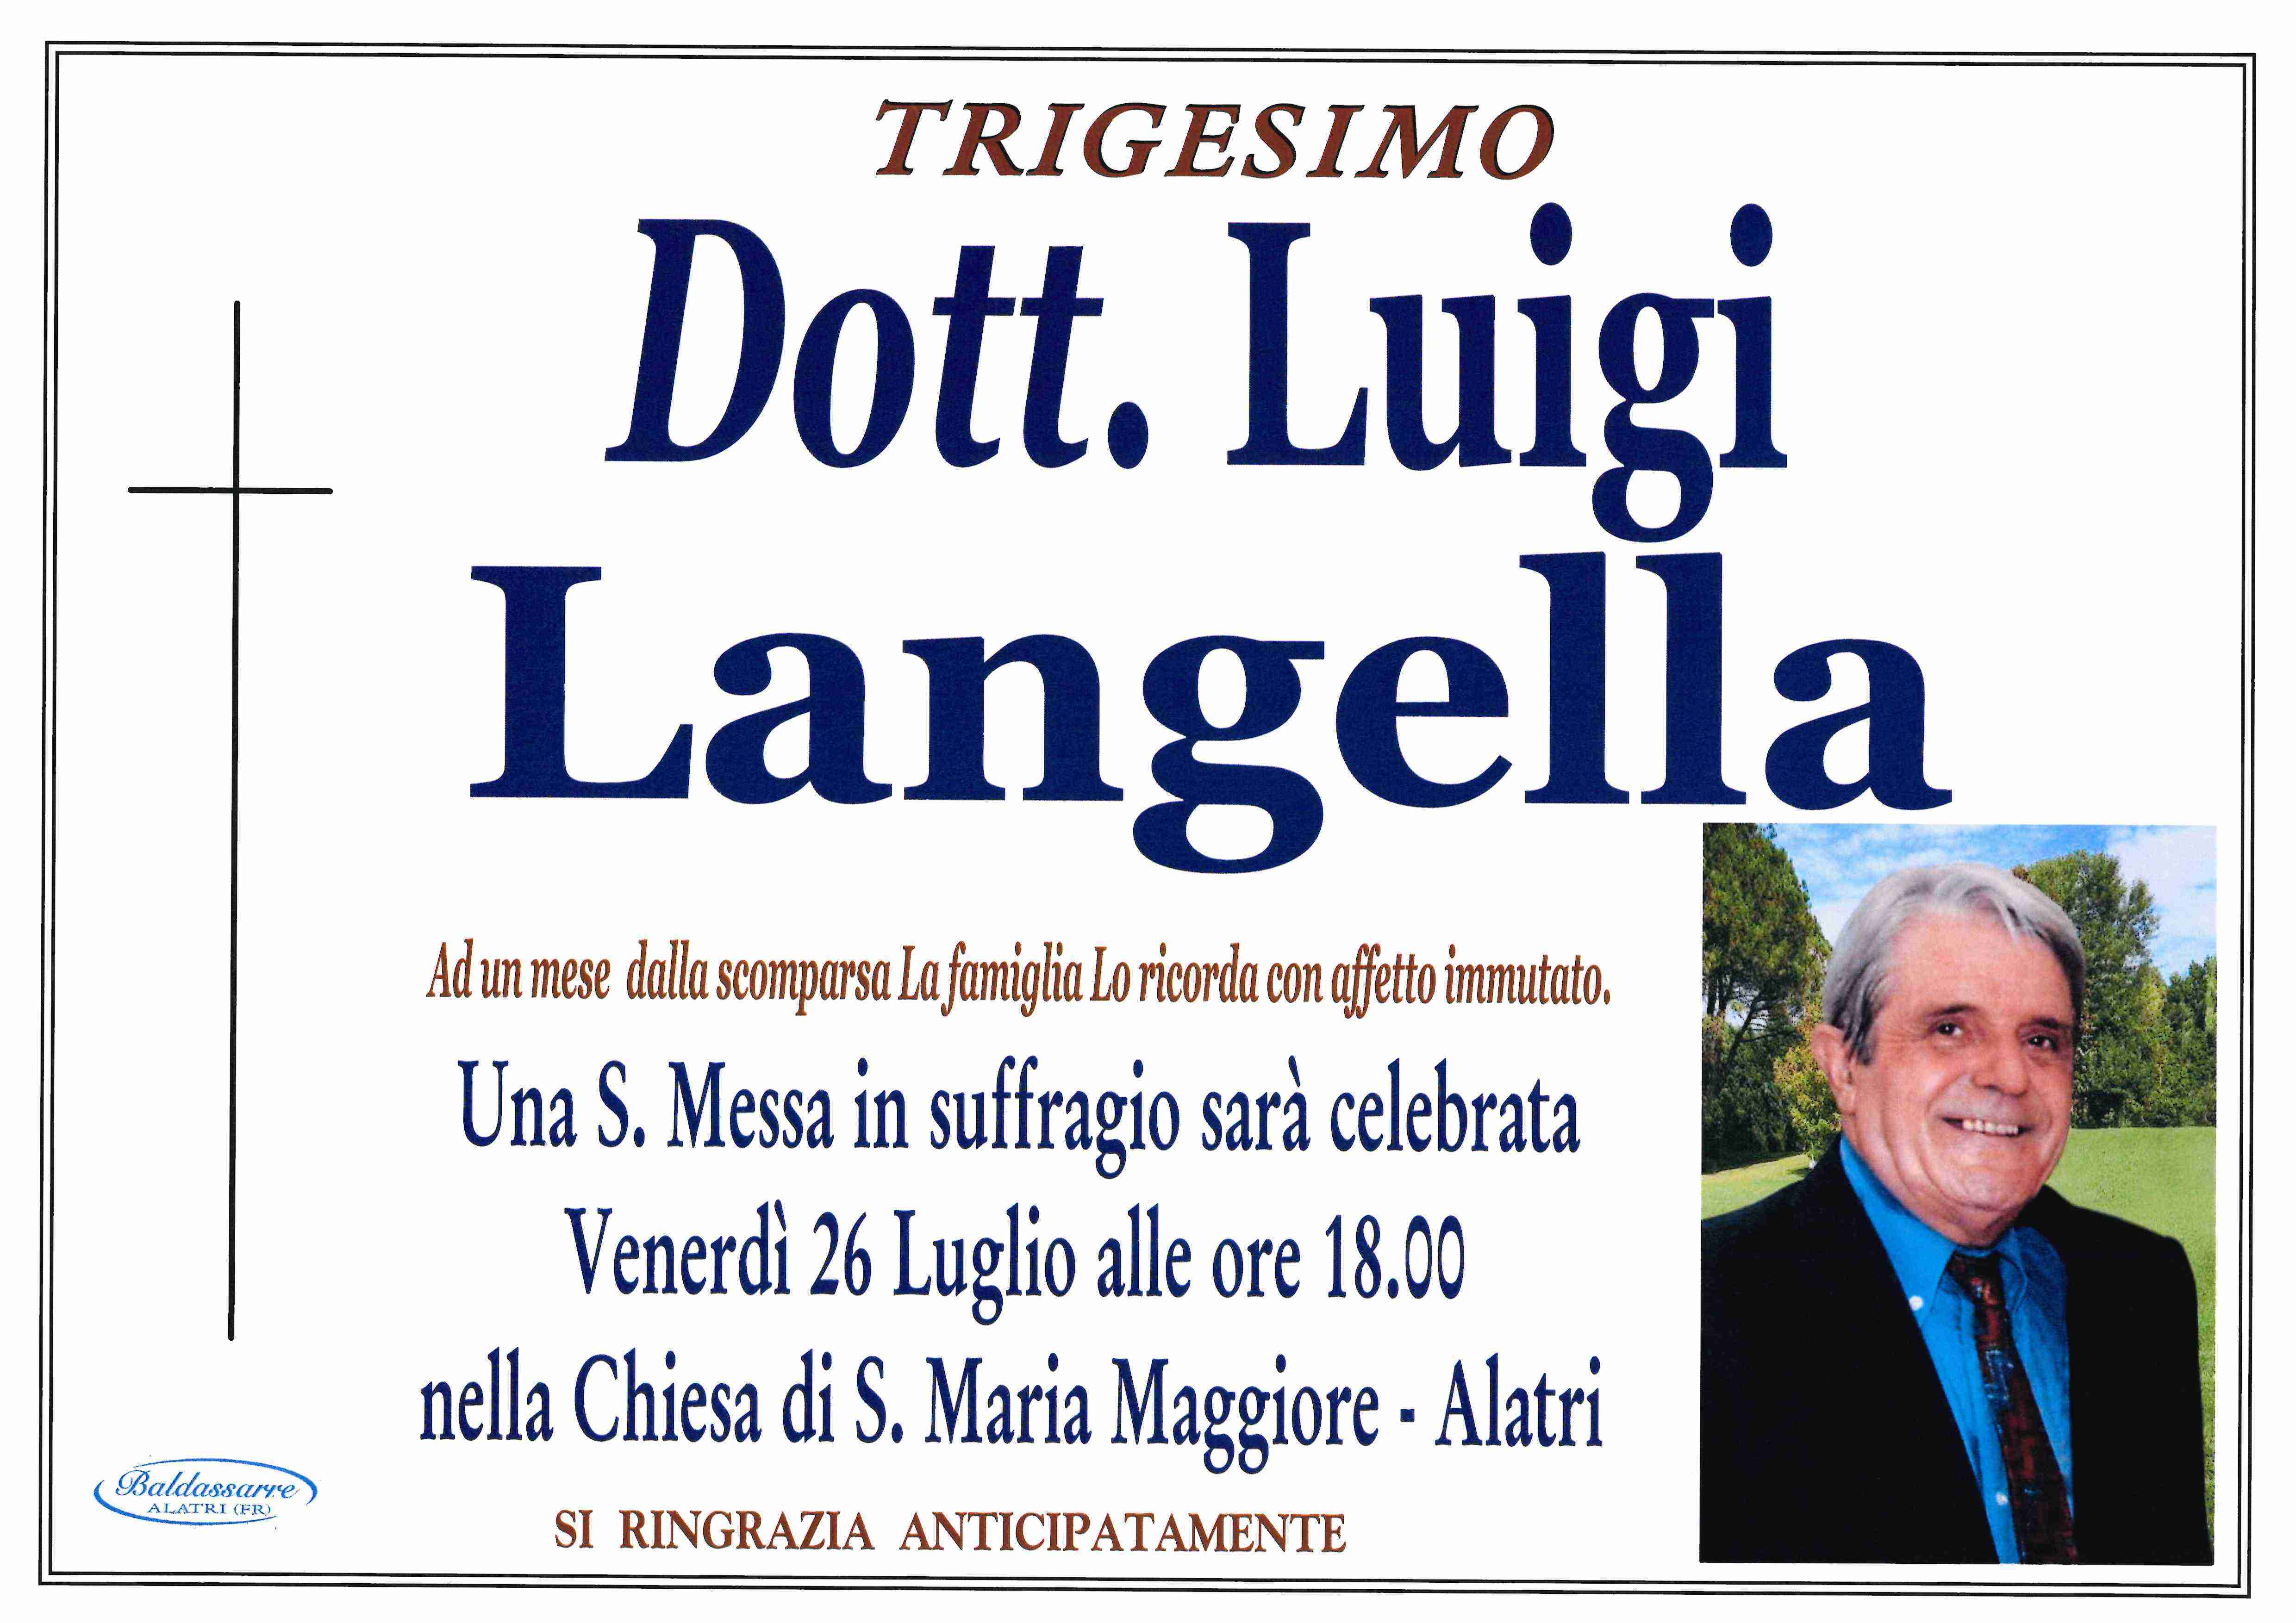 Luigi Langella